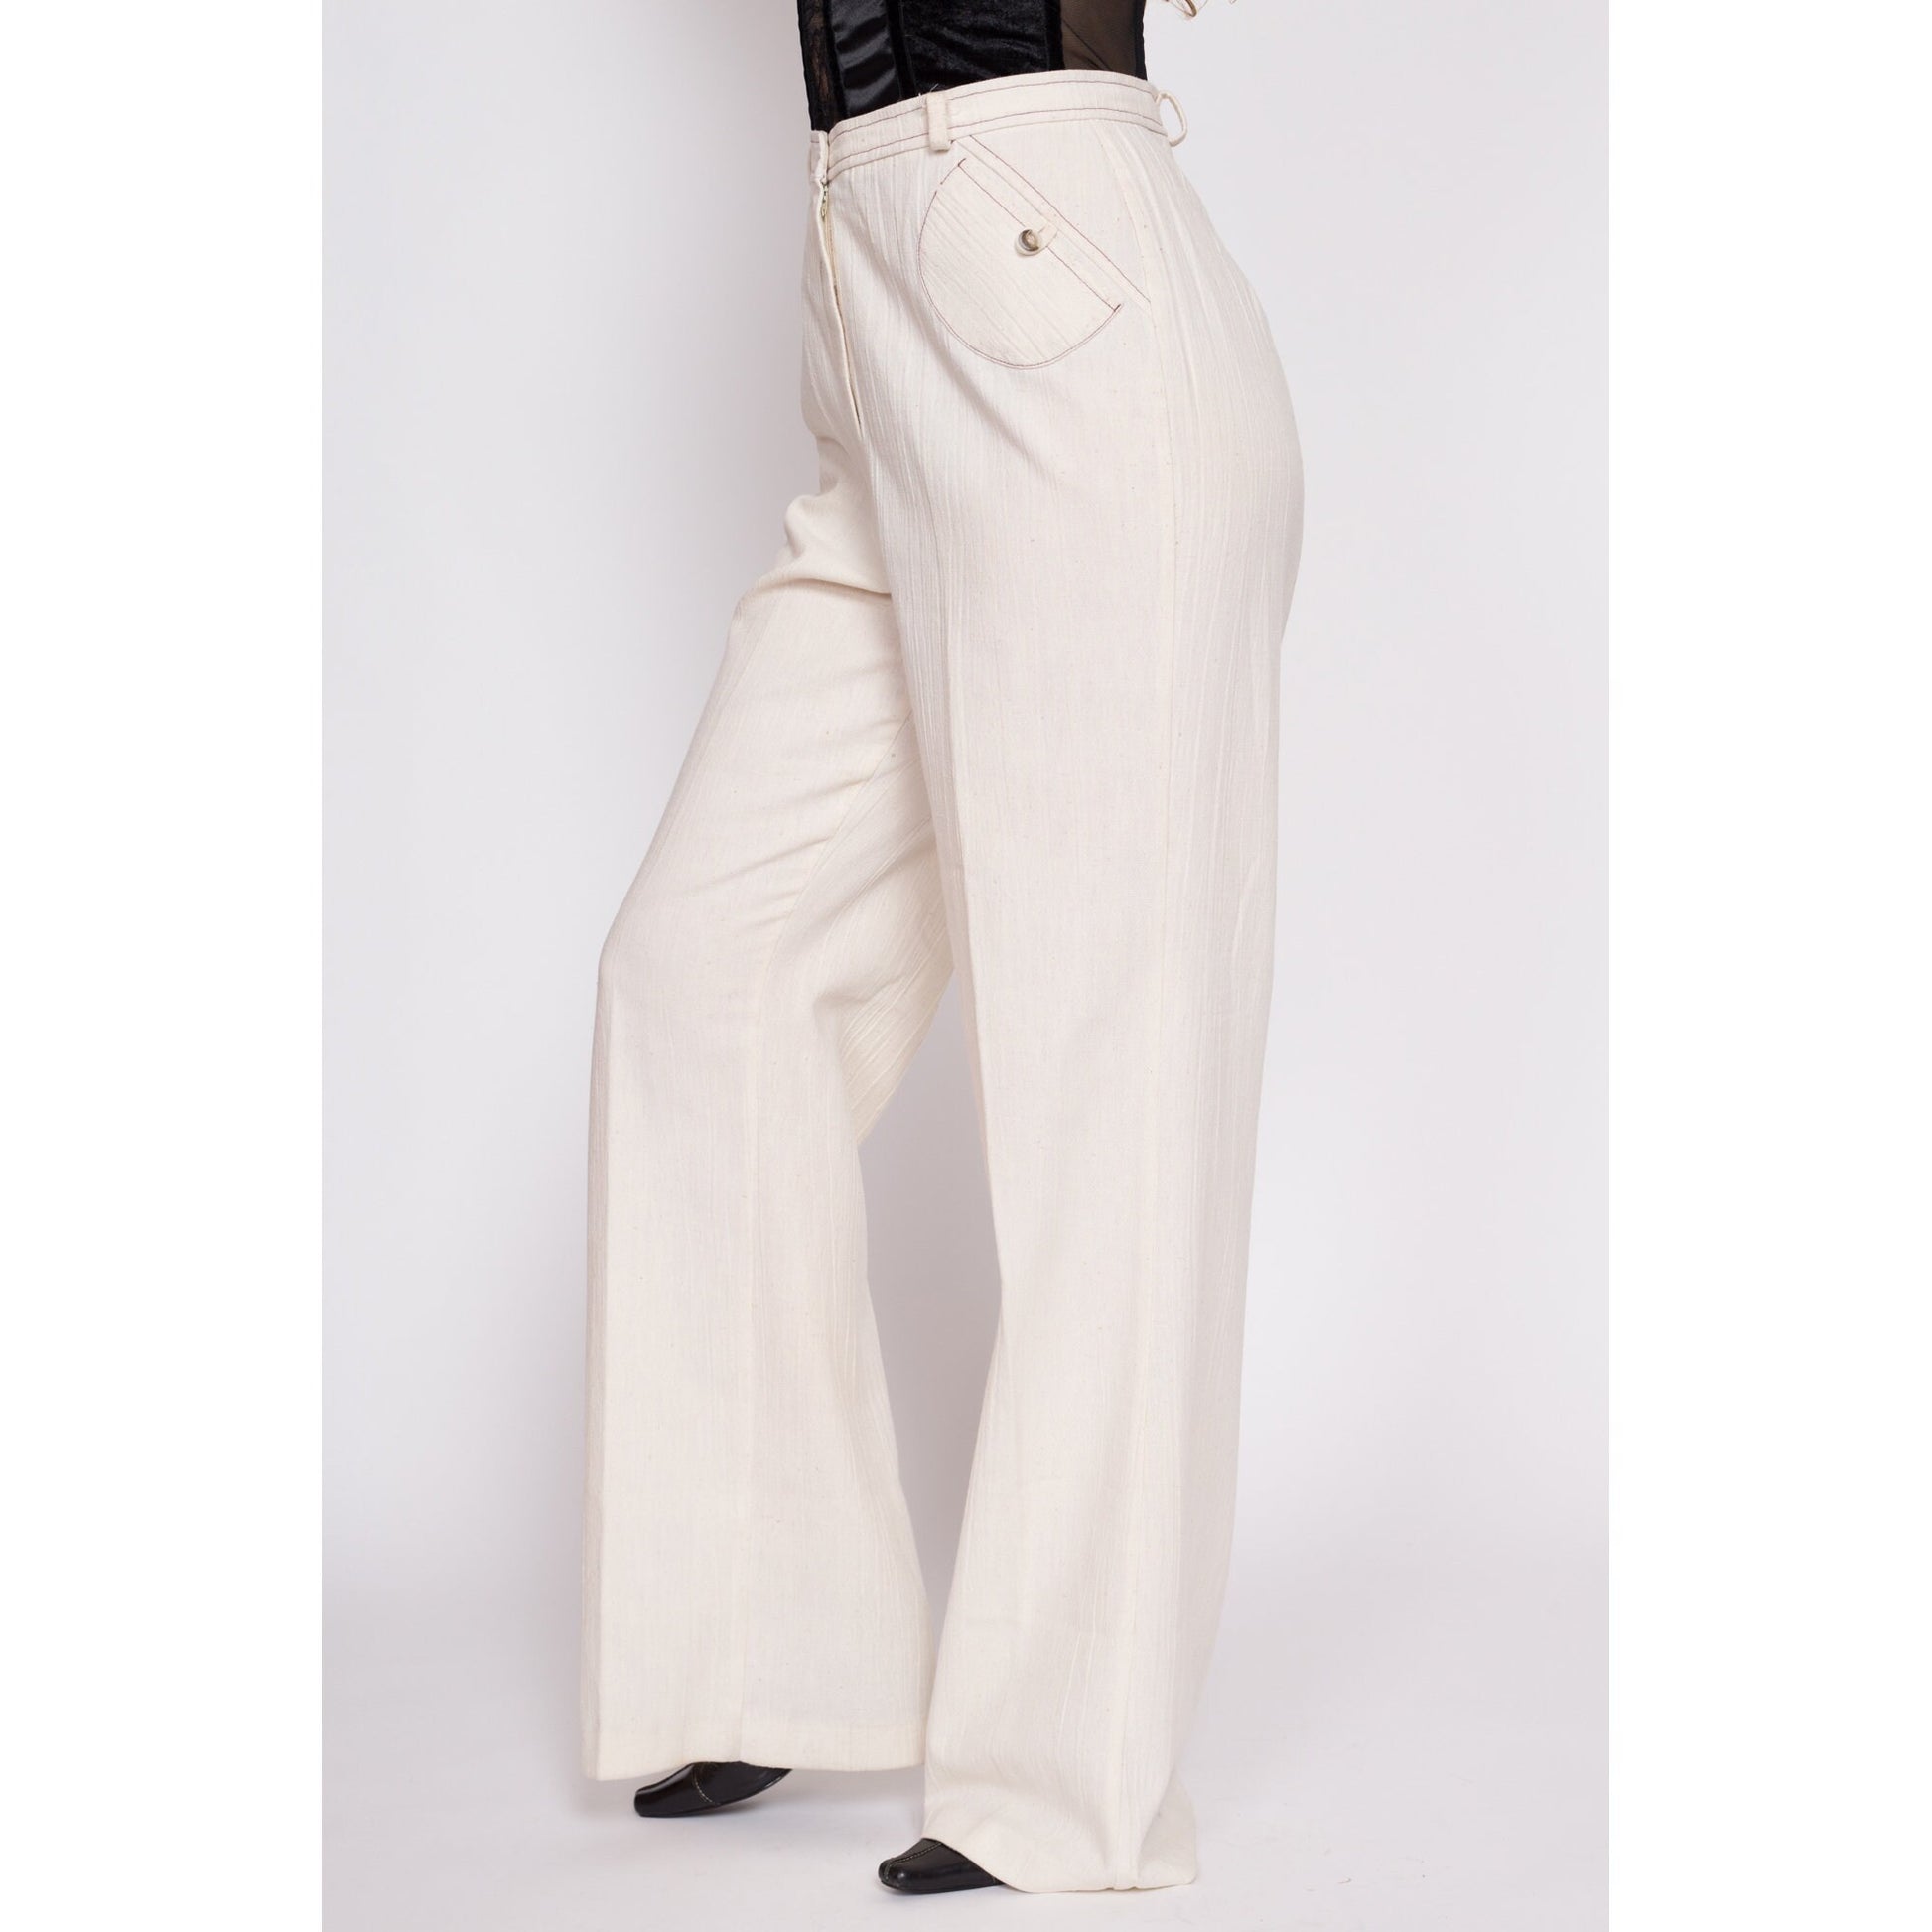 70s Cream High Waisted Contrast Stitch Pants - Medium Tall, 29" Waist | Vintage Woven Cotton Boho Wide Leg Flared Trousers